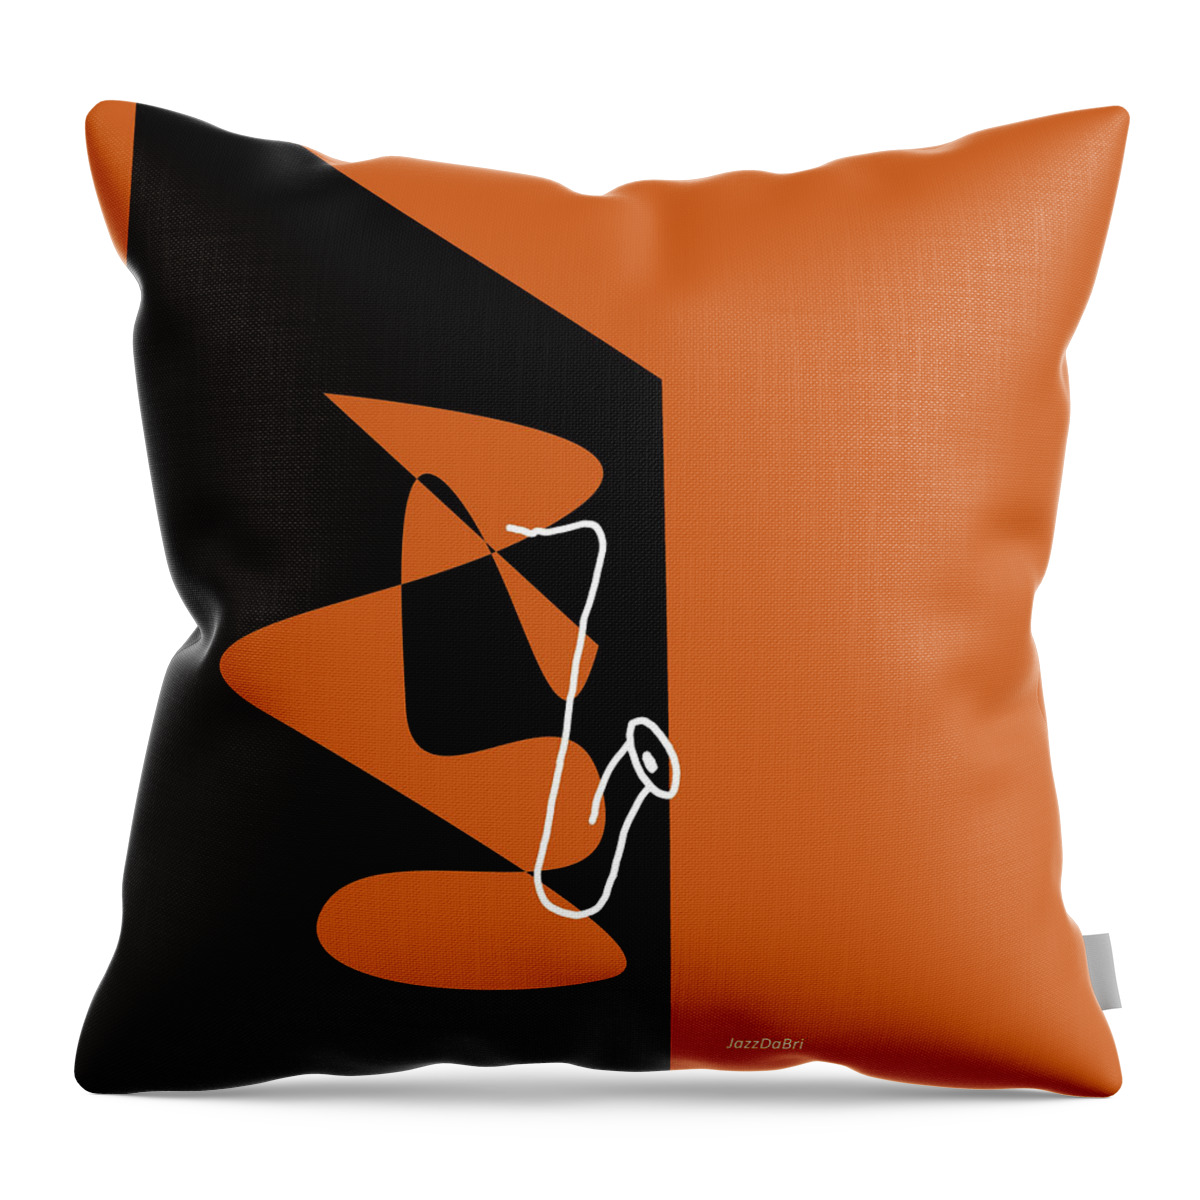 Jazzdabri Throw Pillow featuring the digital art Saxophone in Orange by David Bridburg